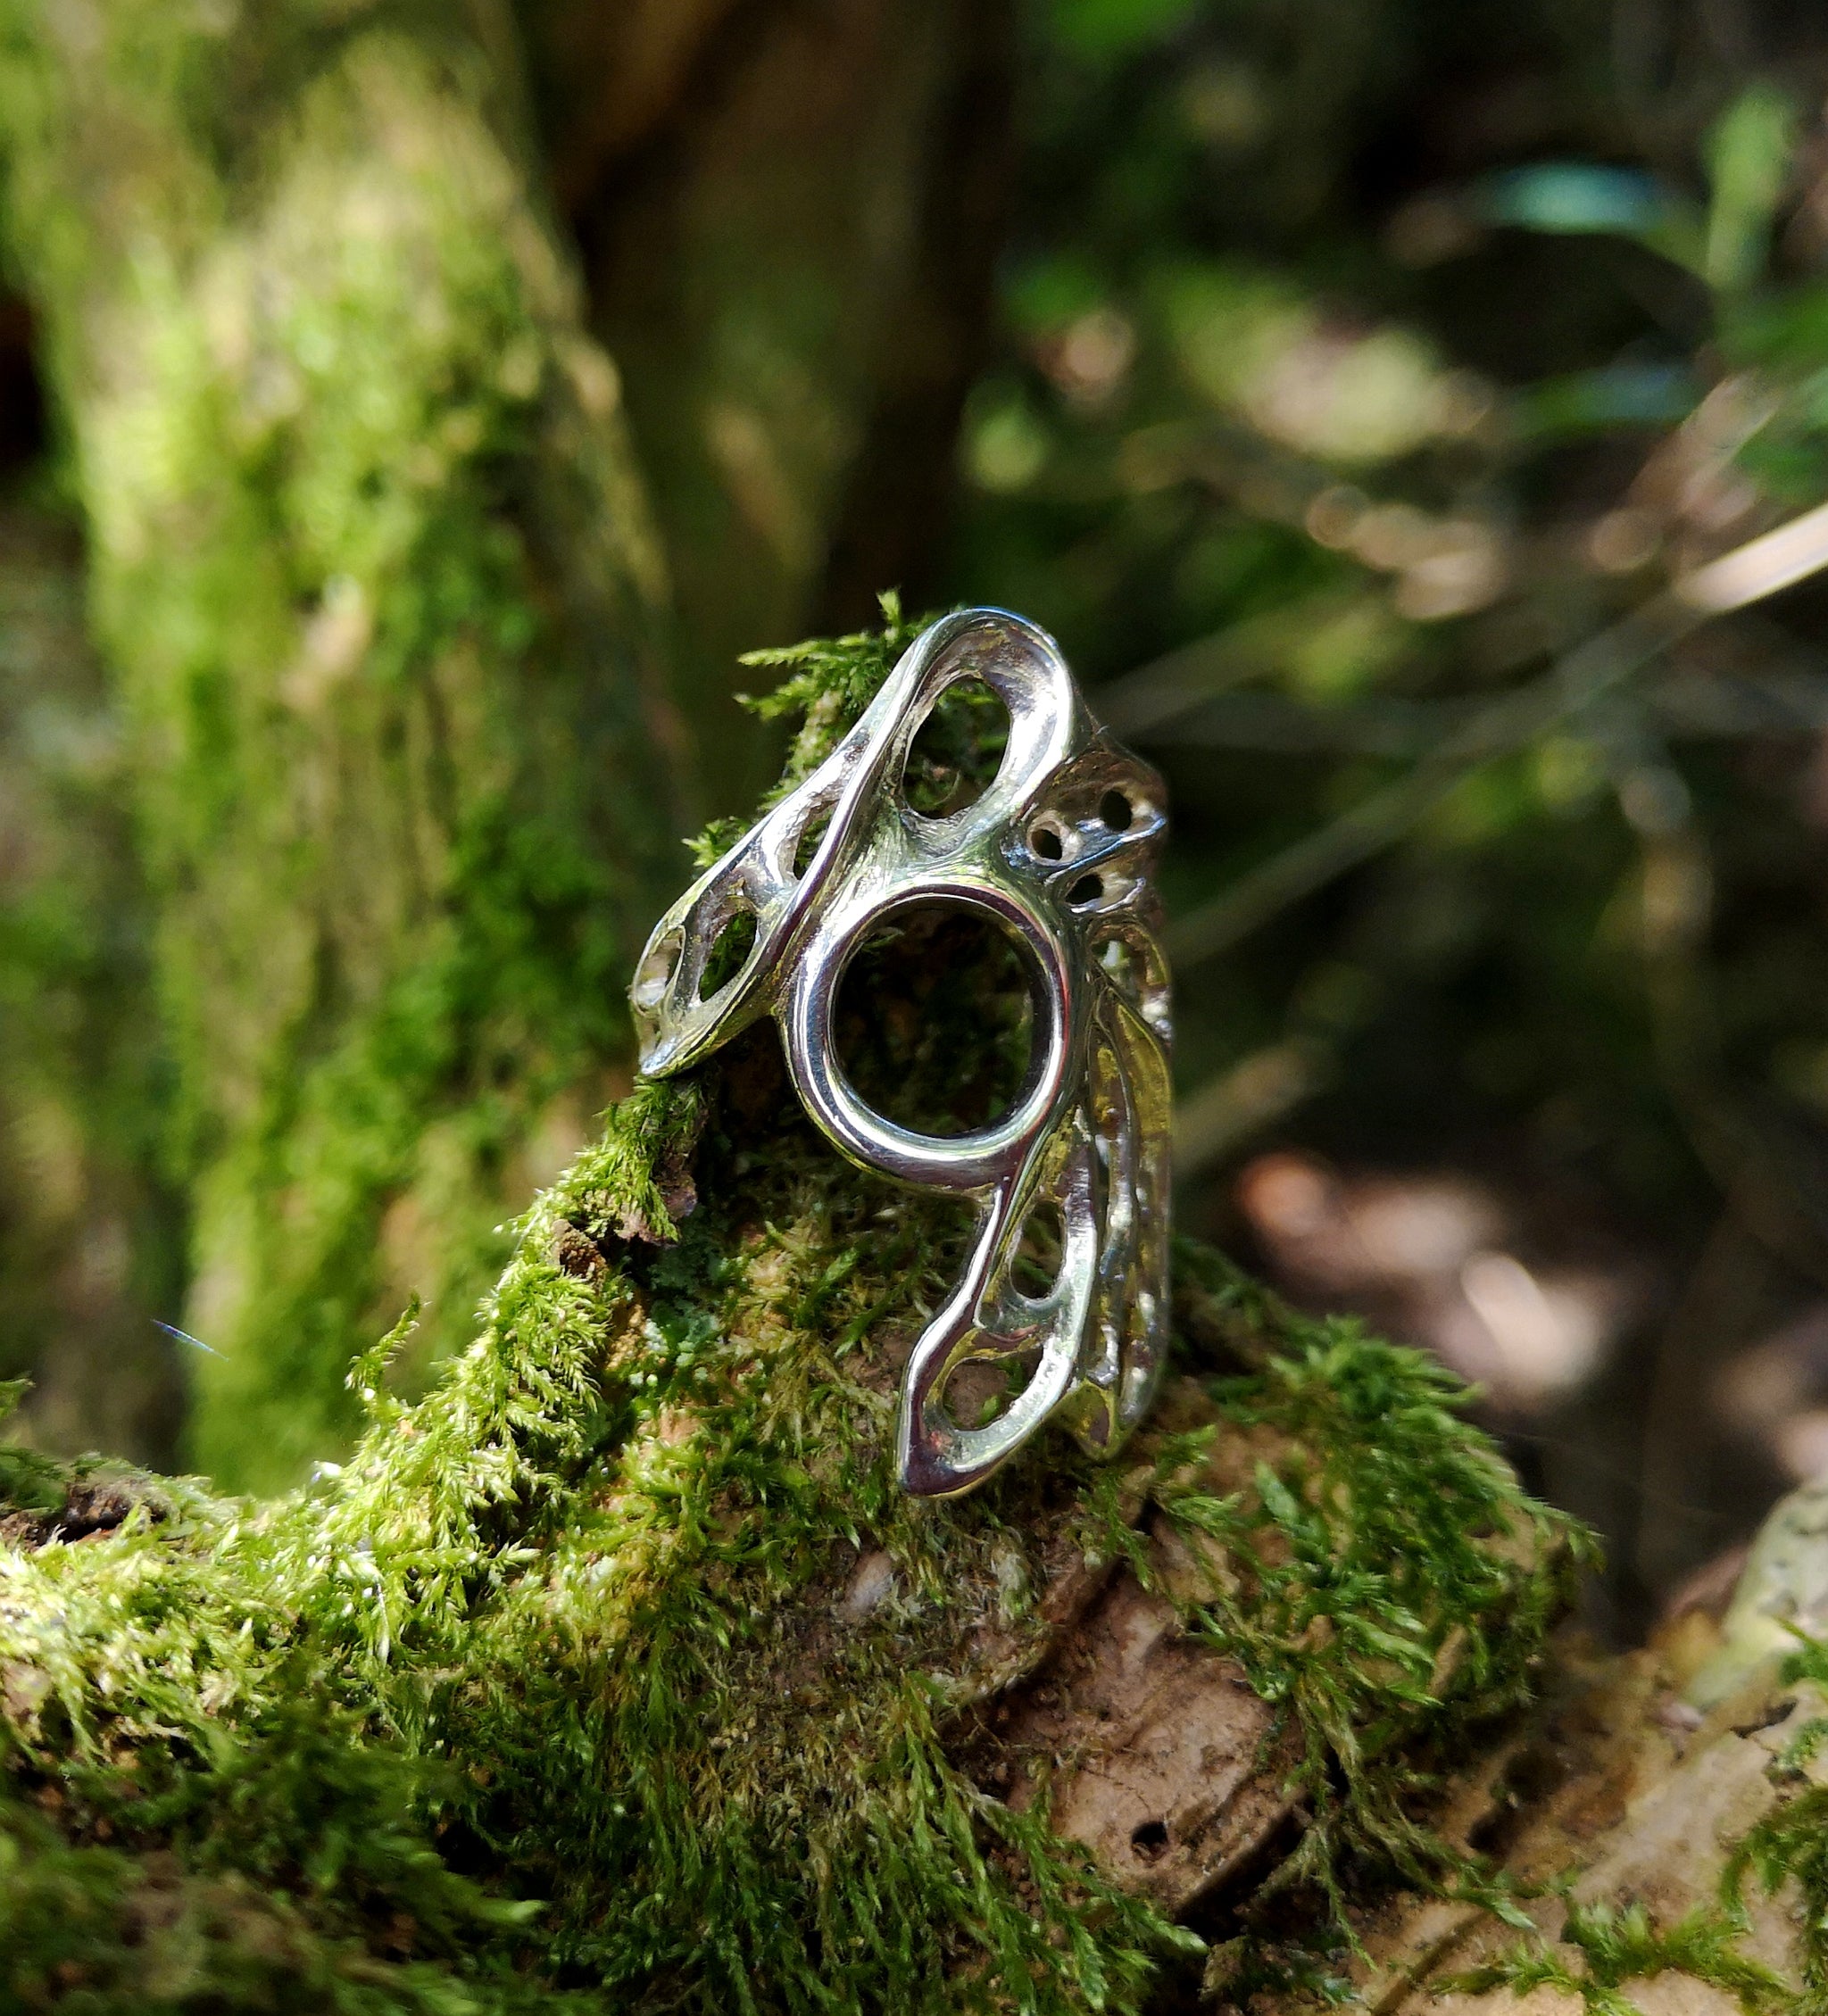 Gorgeous Gossamer Ring, Statement Ring, Gemstone